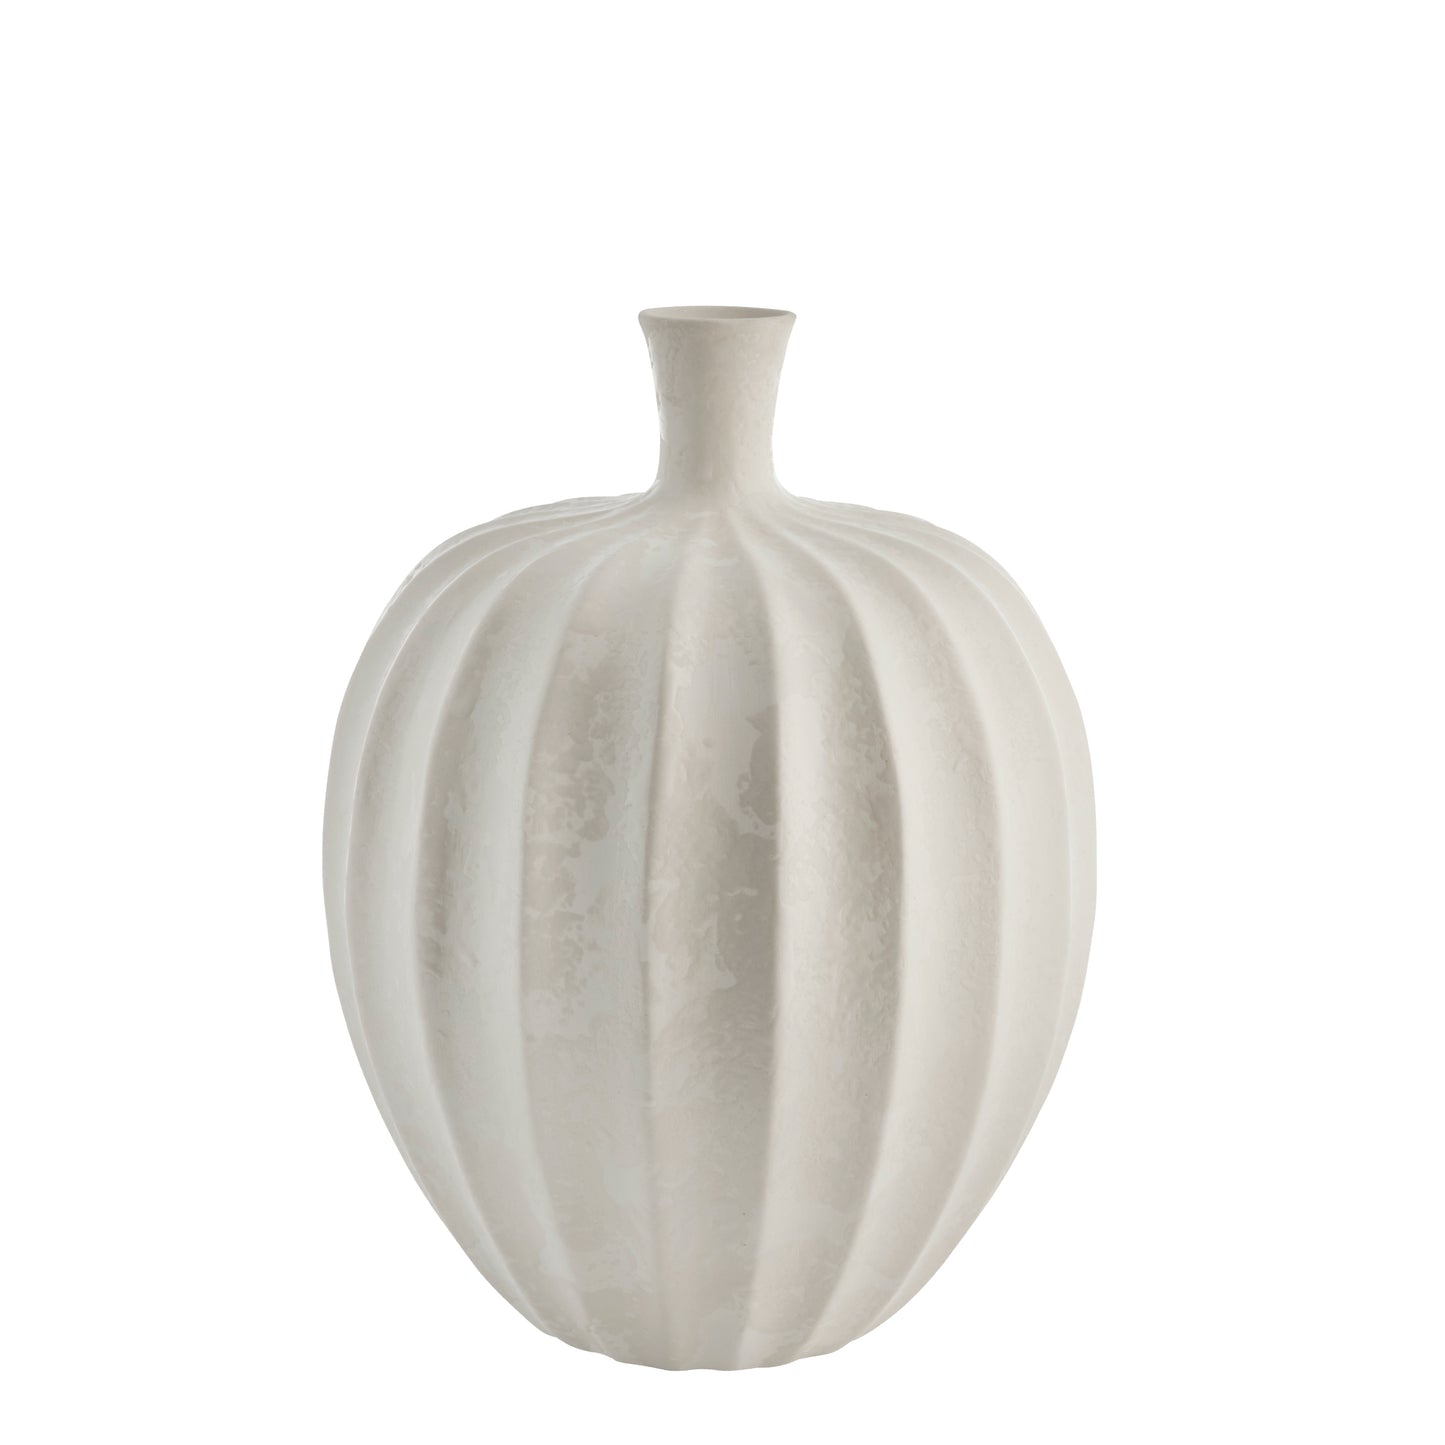 Handmade decorative scalloped vase